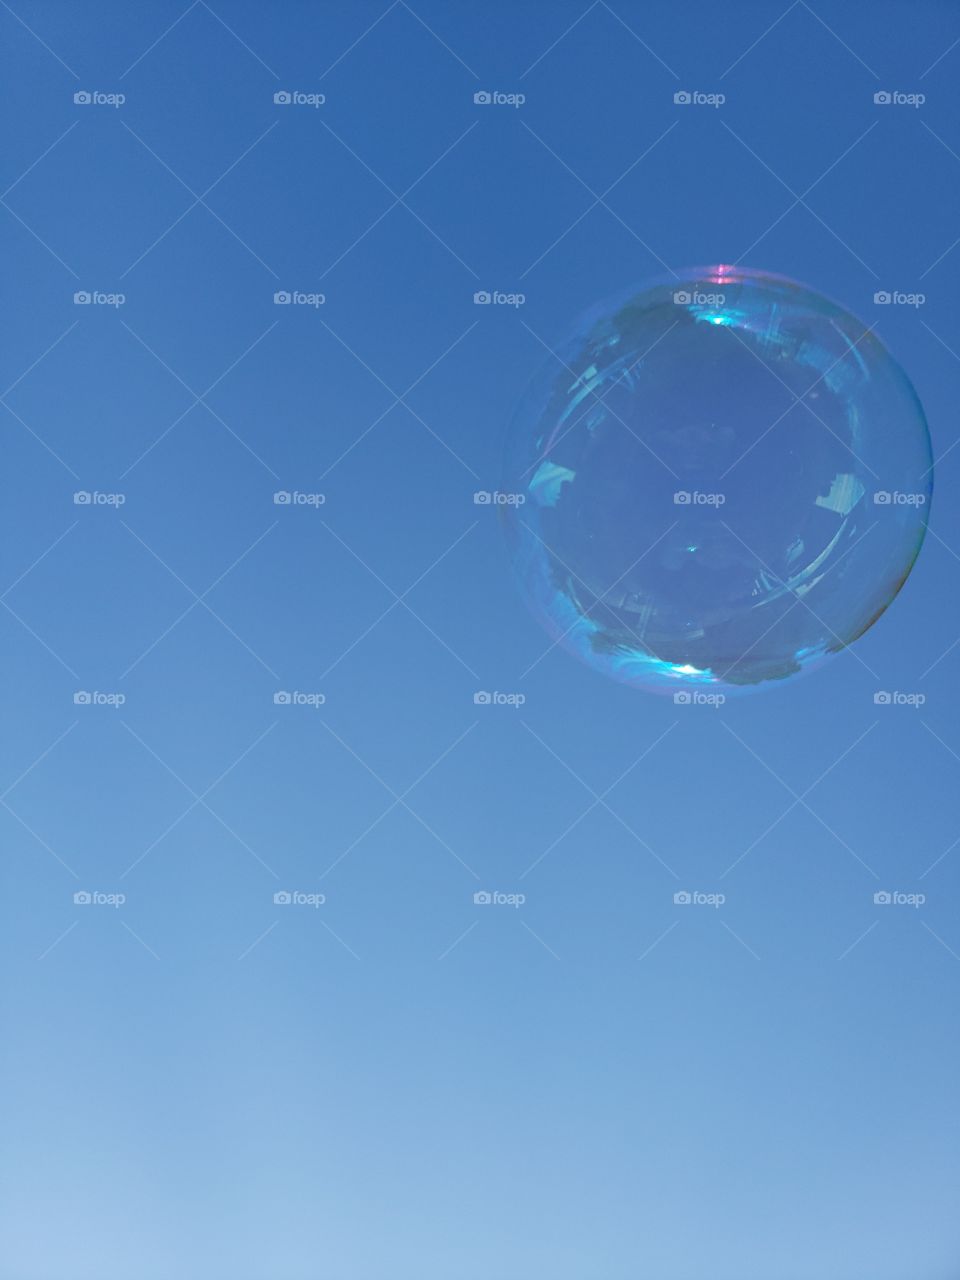 The perfect bubble